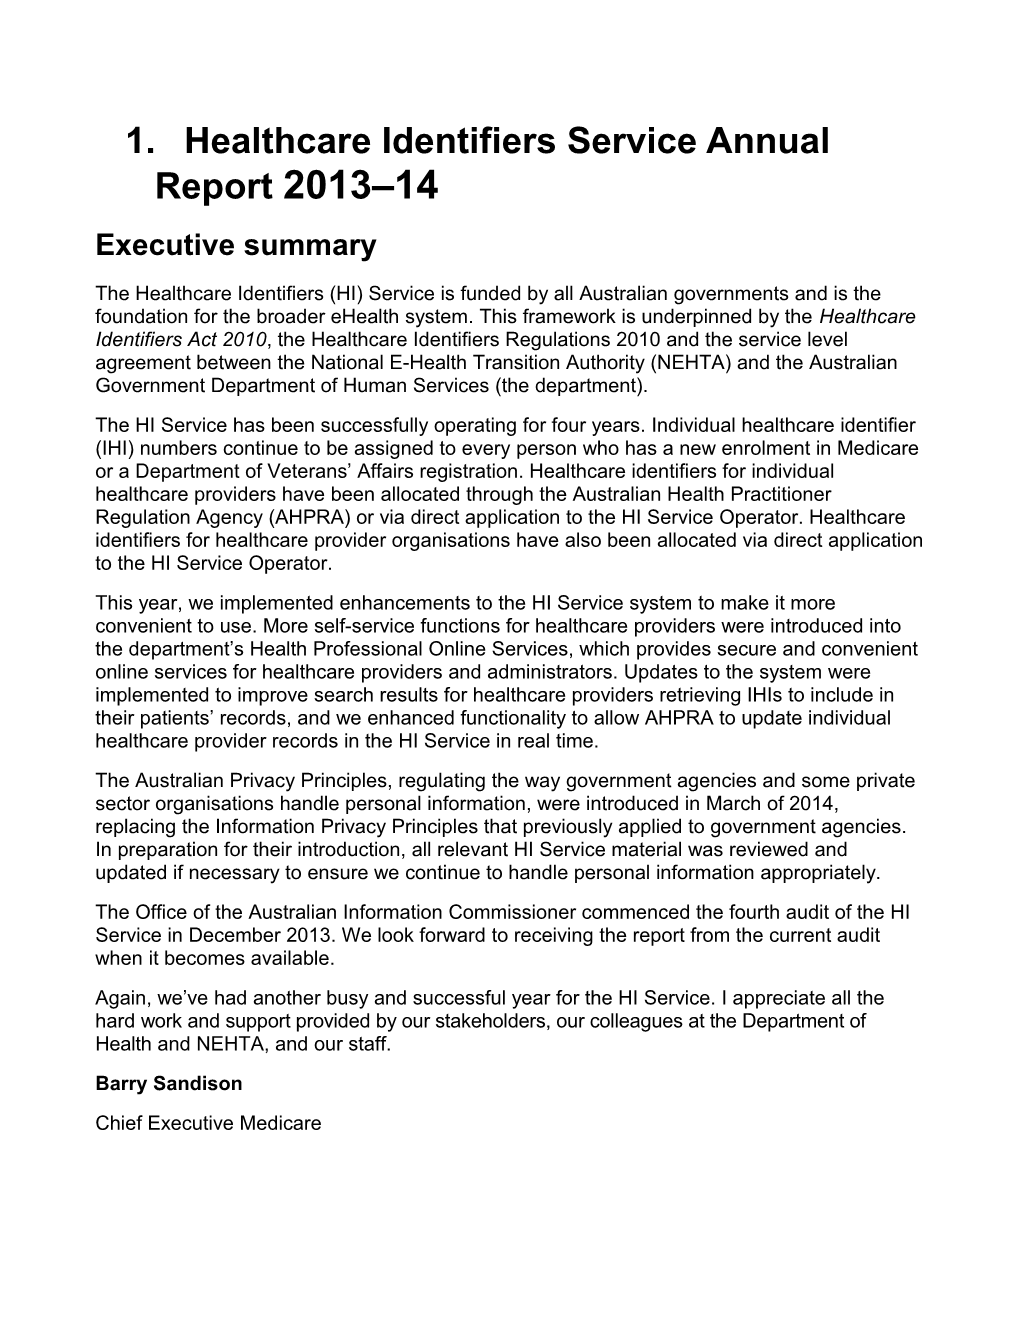 Healthcare Identifiers Service Annual Report 2013 14